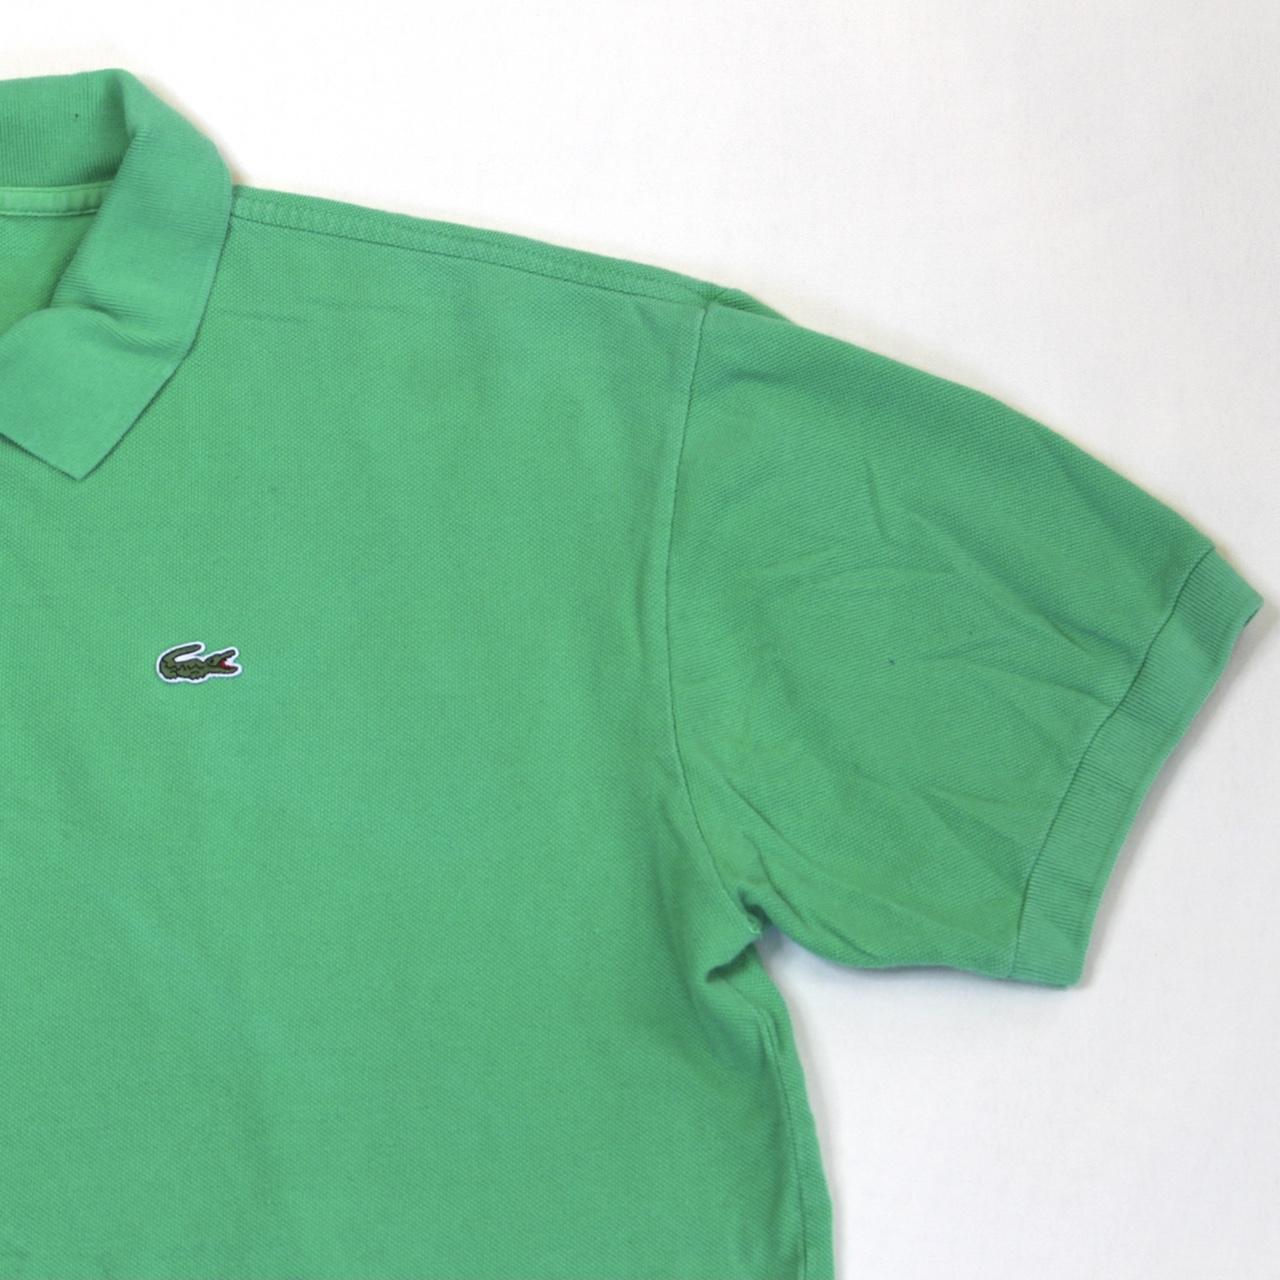 Product Image 2 - cute basic green short sleeve